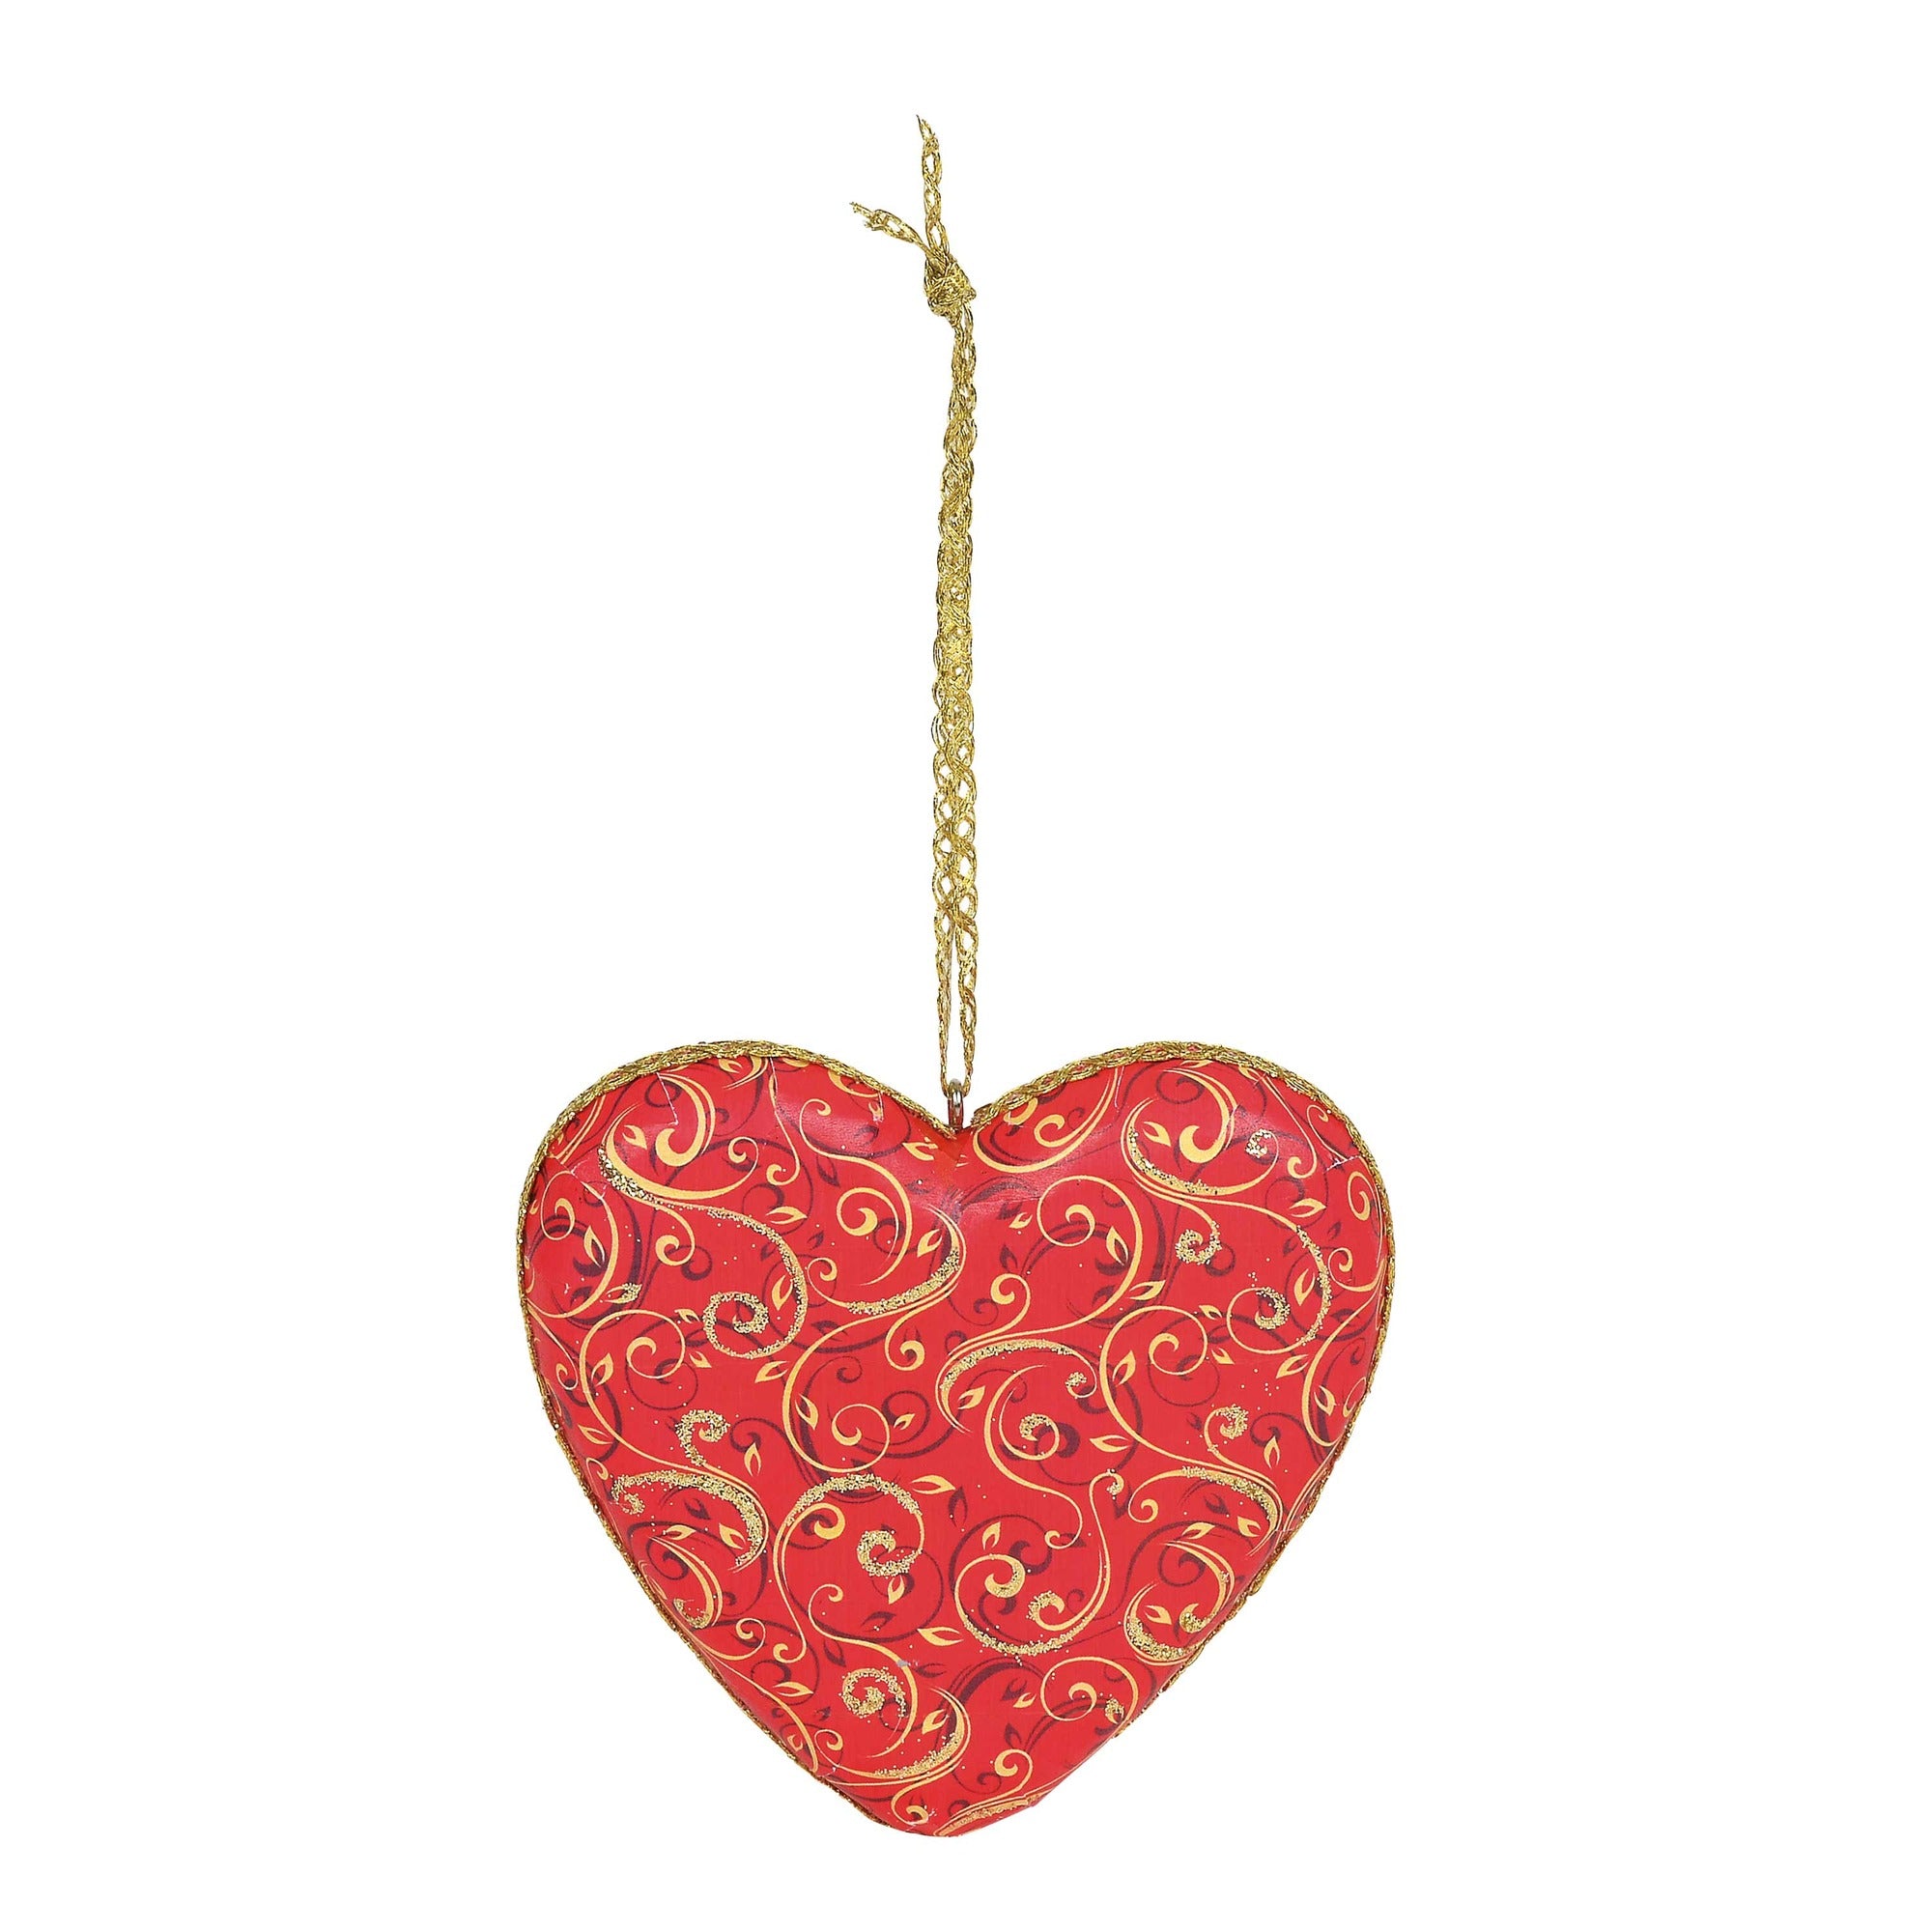 Take Heart Ornaments